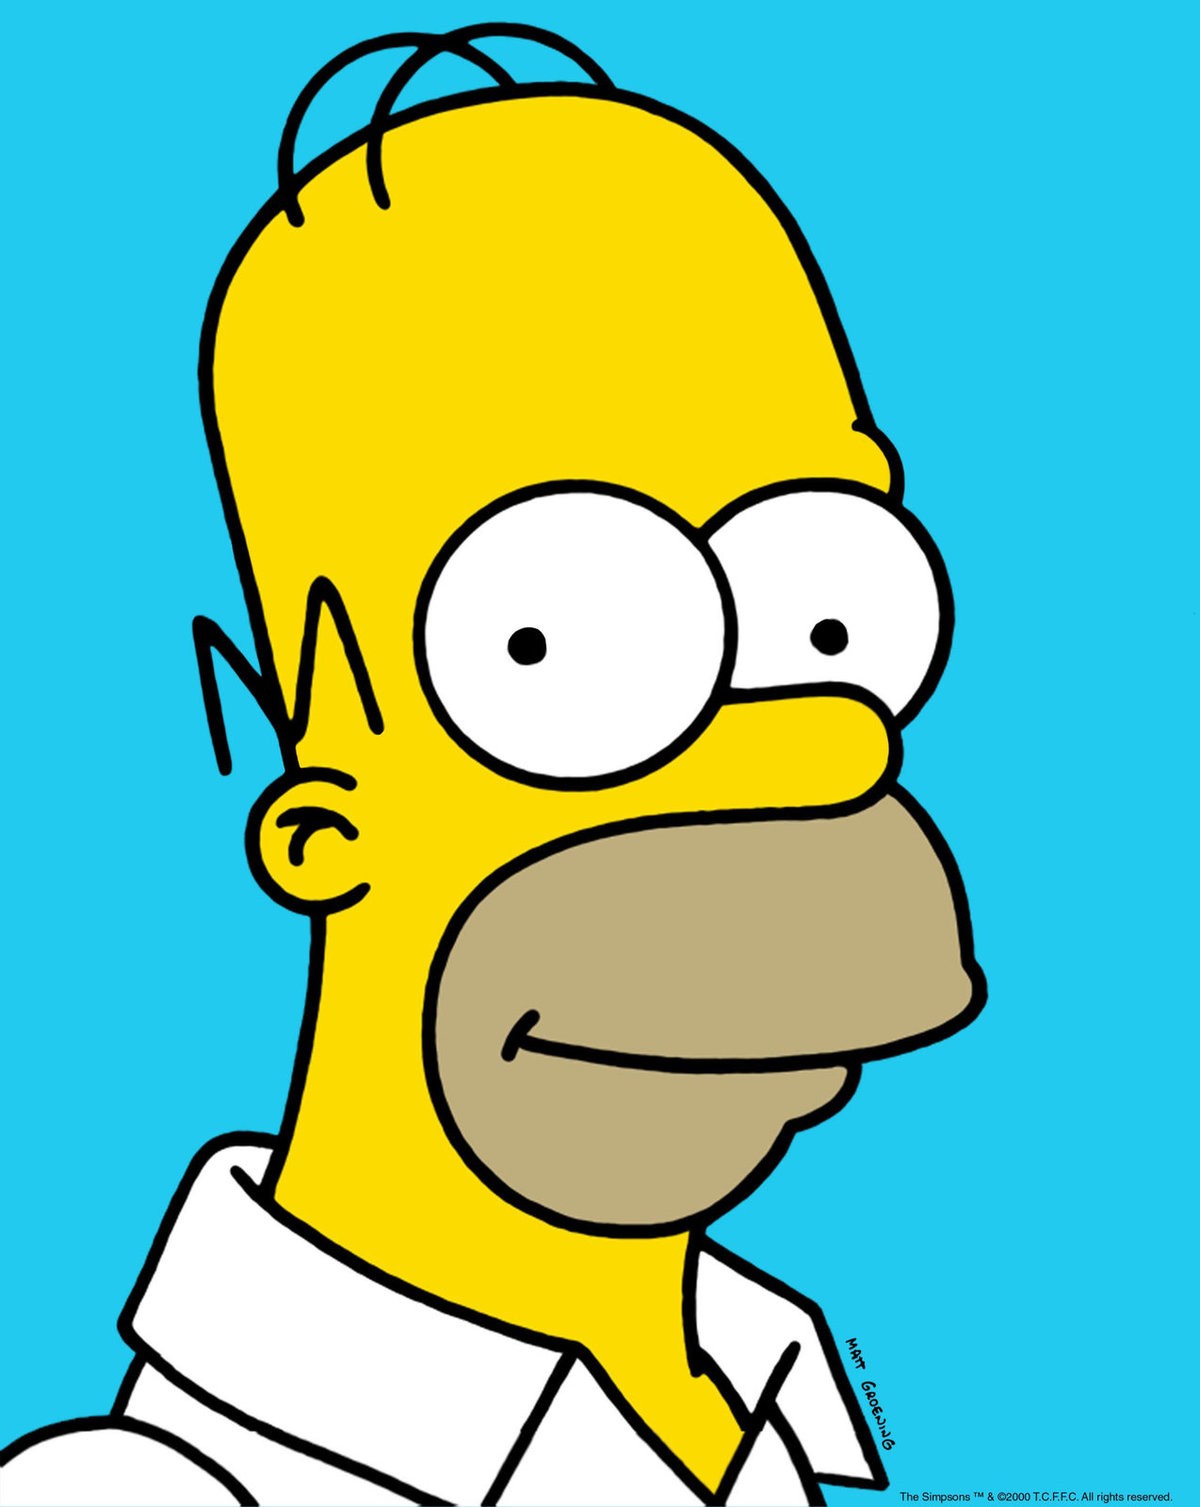 Vlastimil Zavřel dabuje Homera Simpsona.